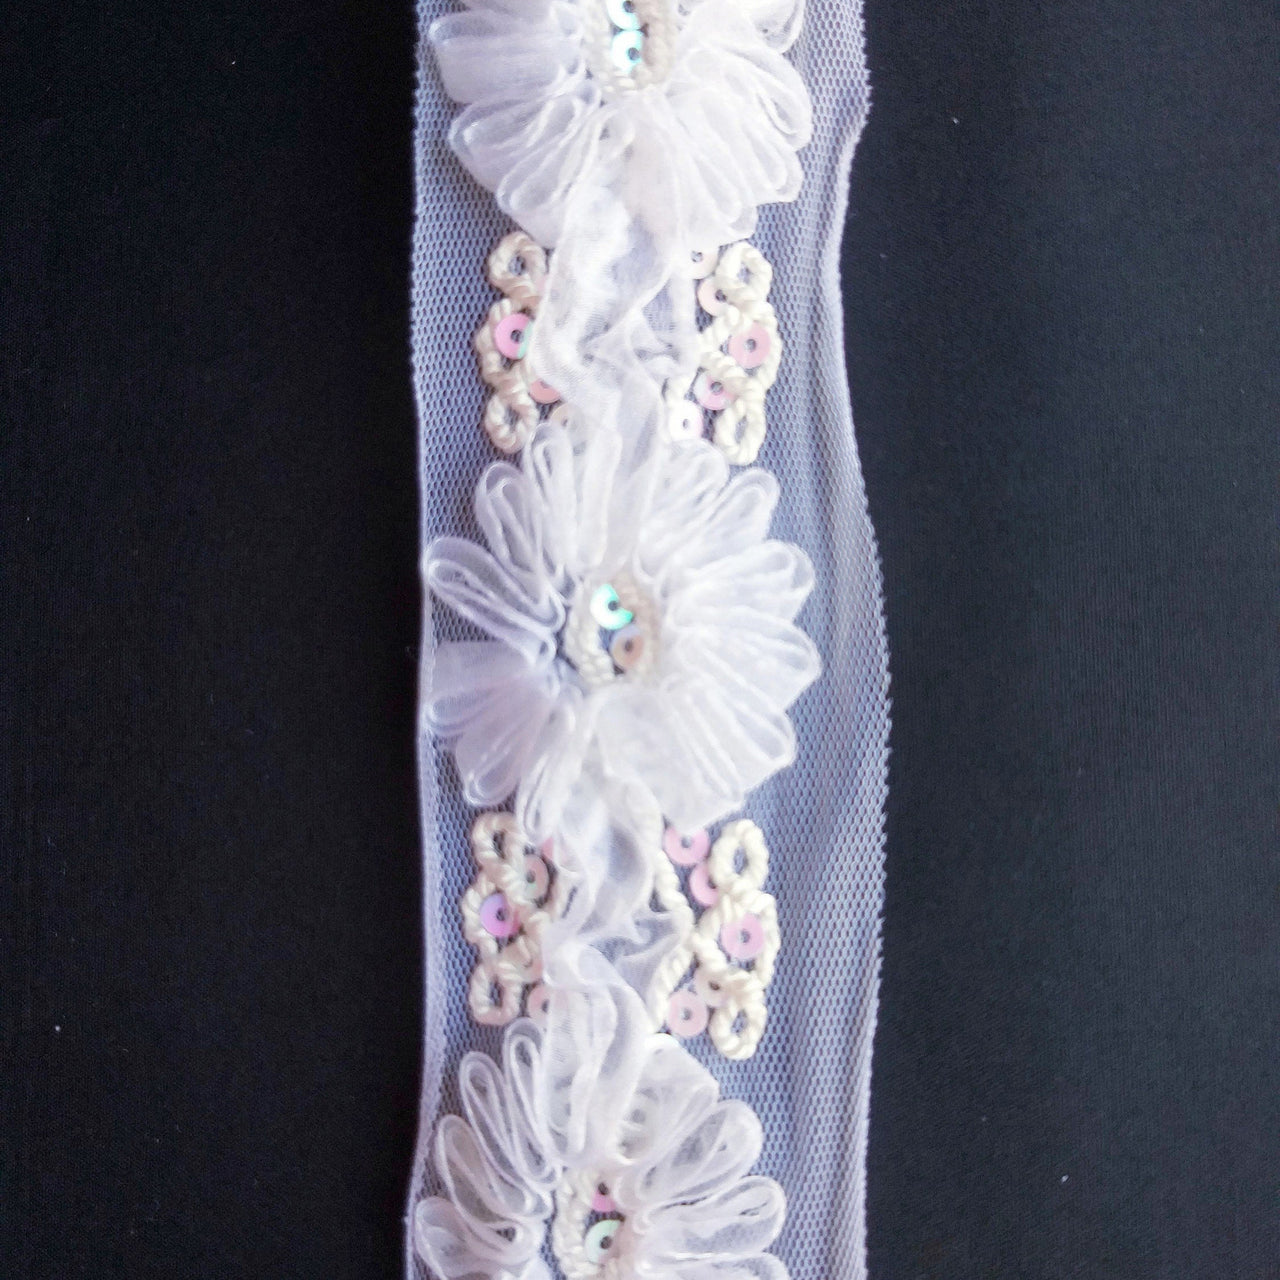 White Flower Tissue Net Fabric Lace Trim With Sequins, Floral Trim, Wedding Supplies